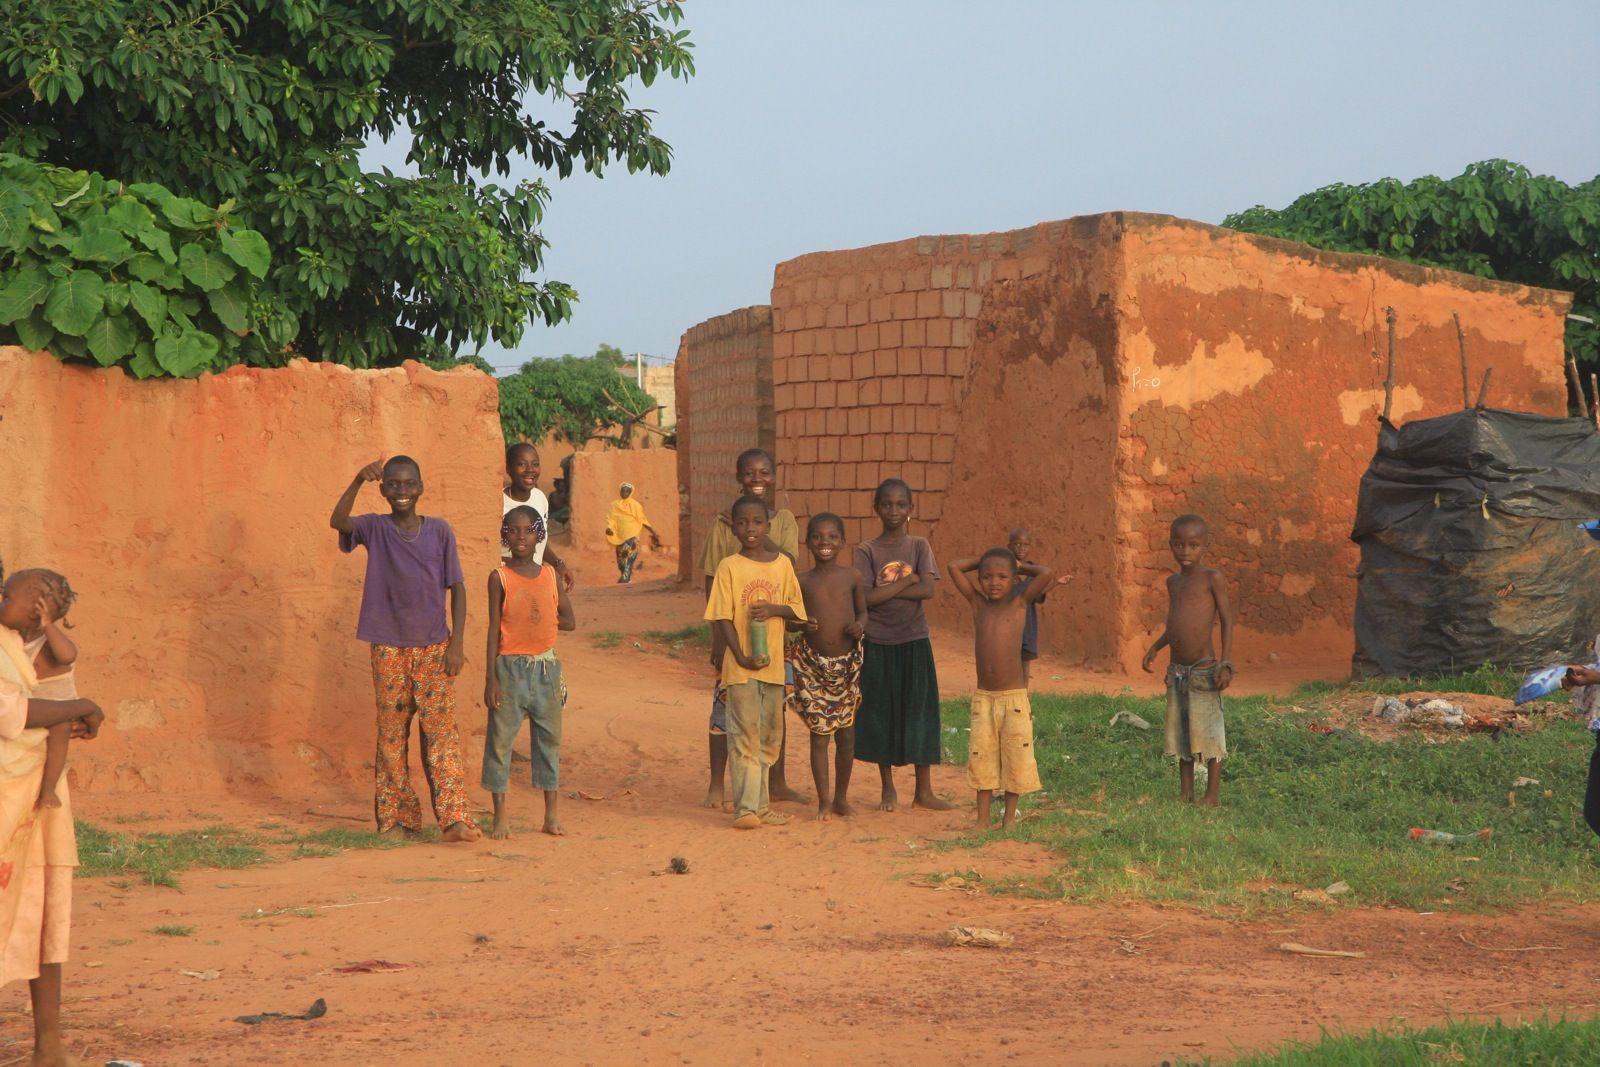 Burkina faso young children